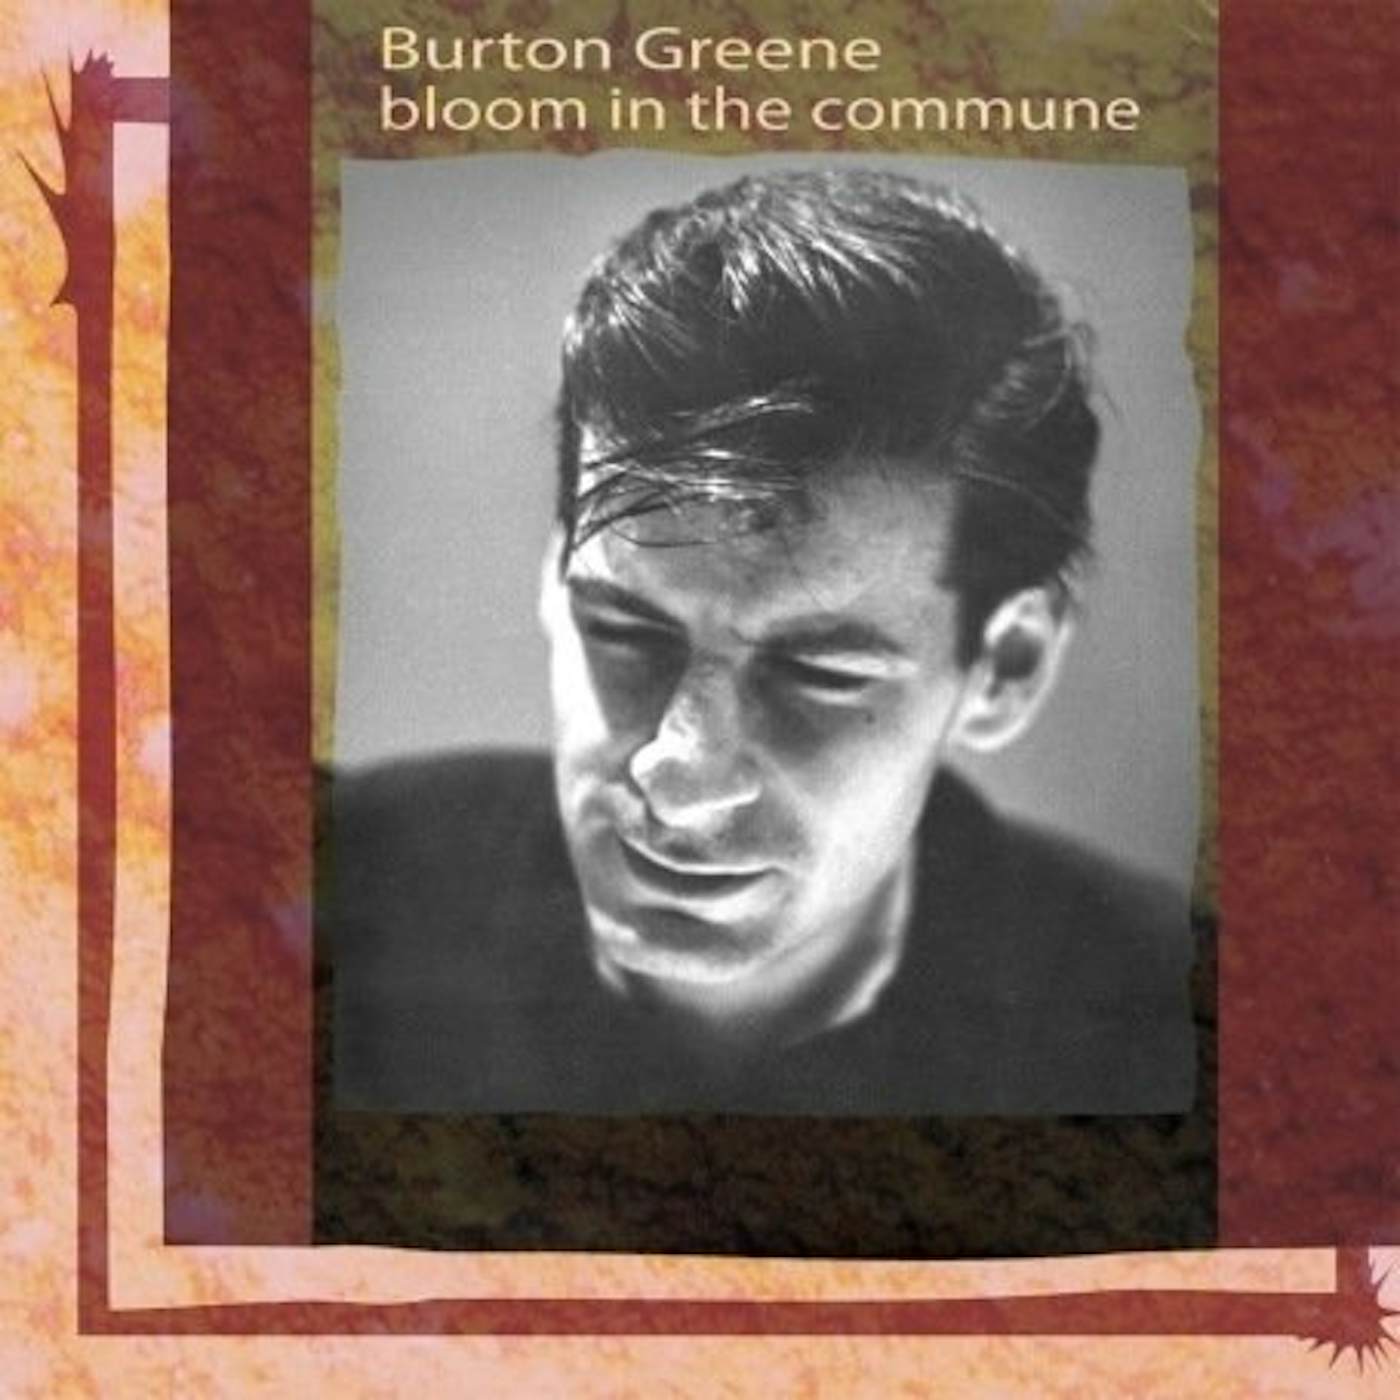 Burton Greene BLOOM IN THE COMMUNE CD